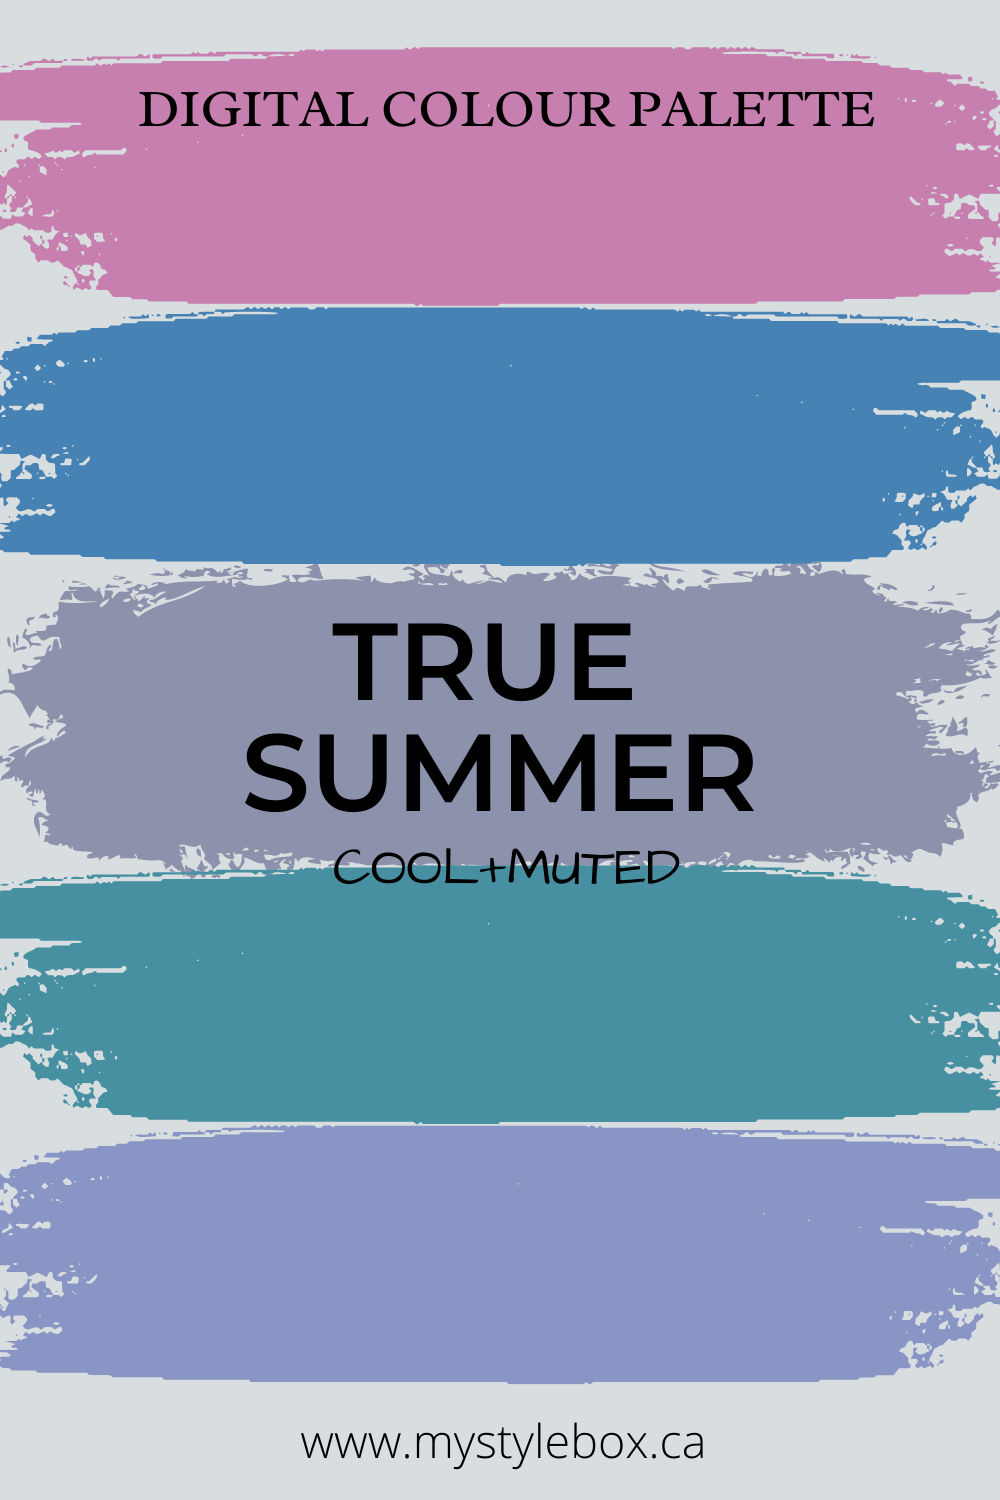 True Summer Digital Colour Palette